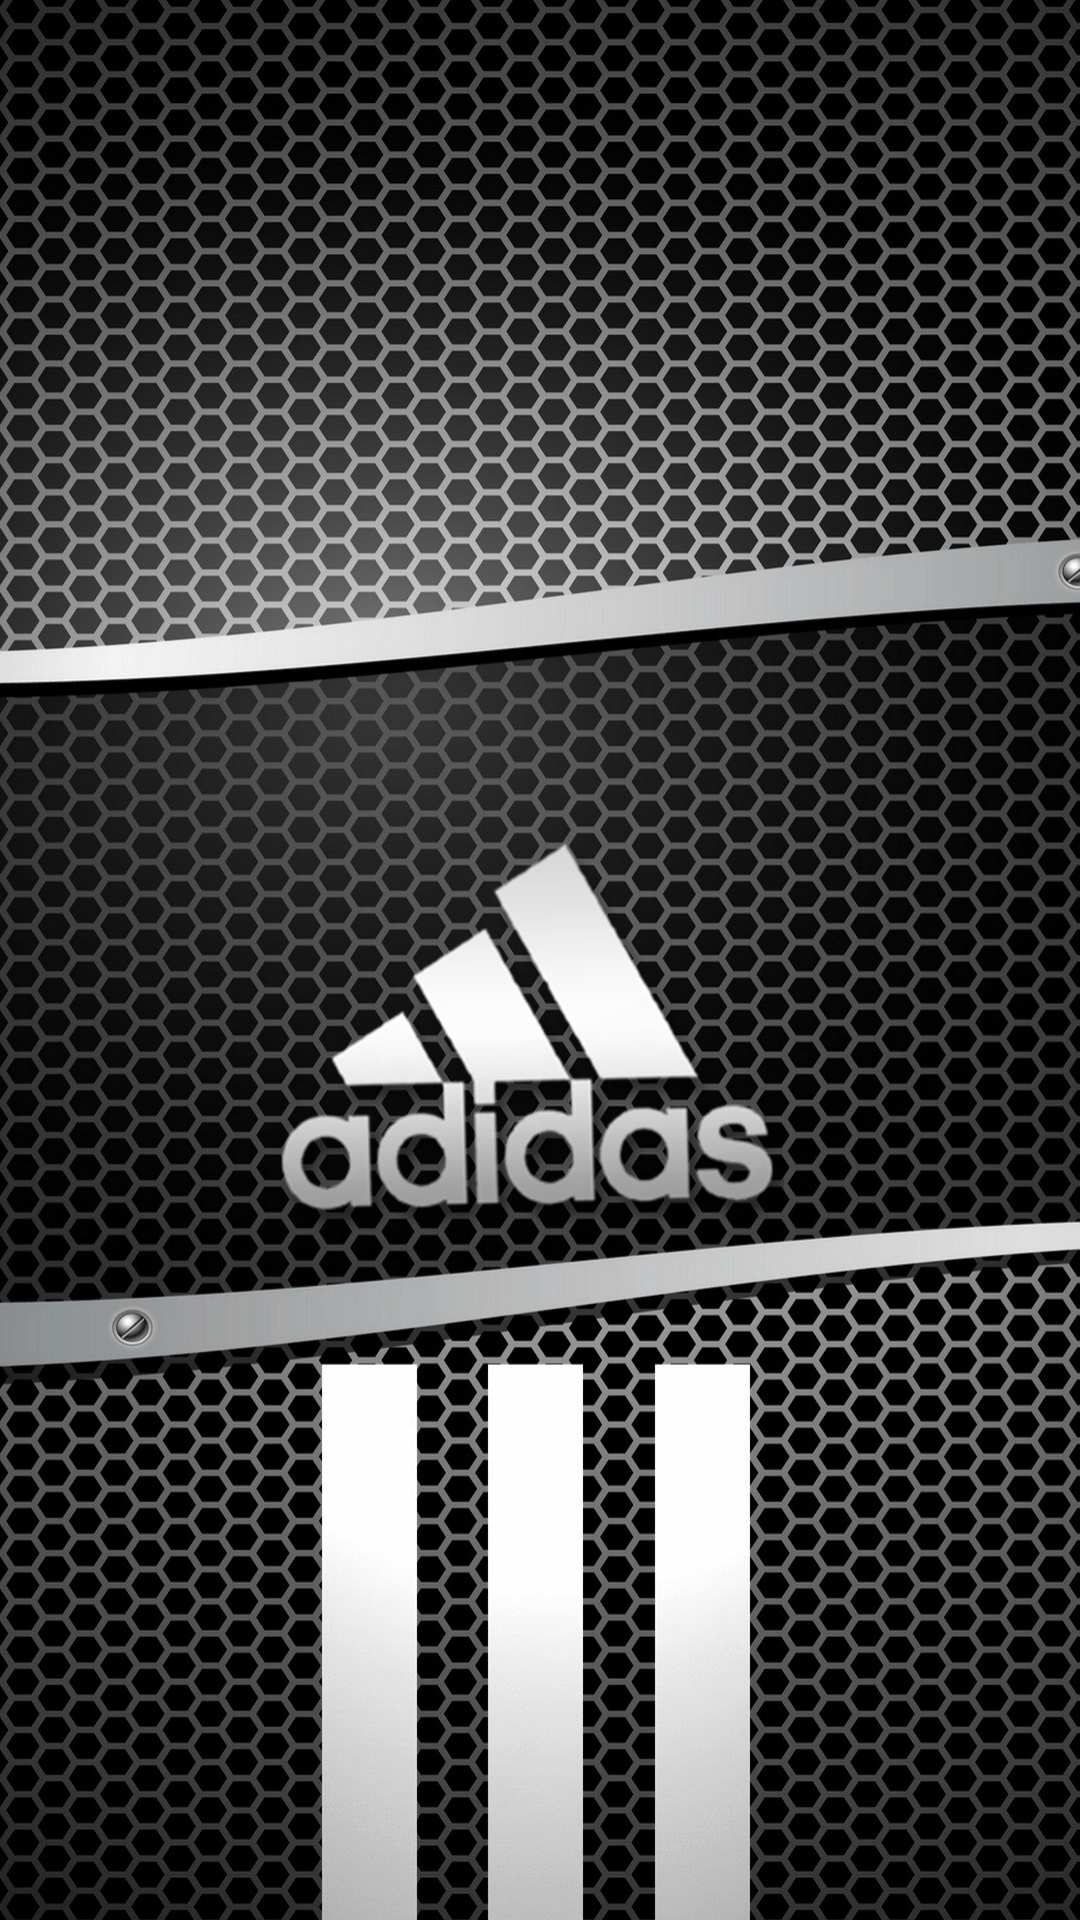 adidas iphone logo wallpaper. ololoshenka. Adidas